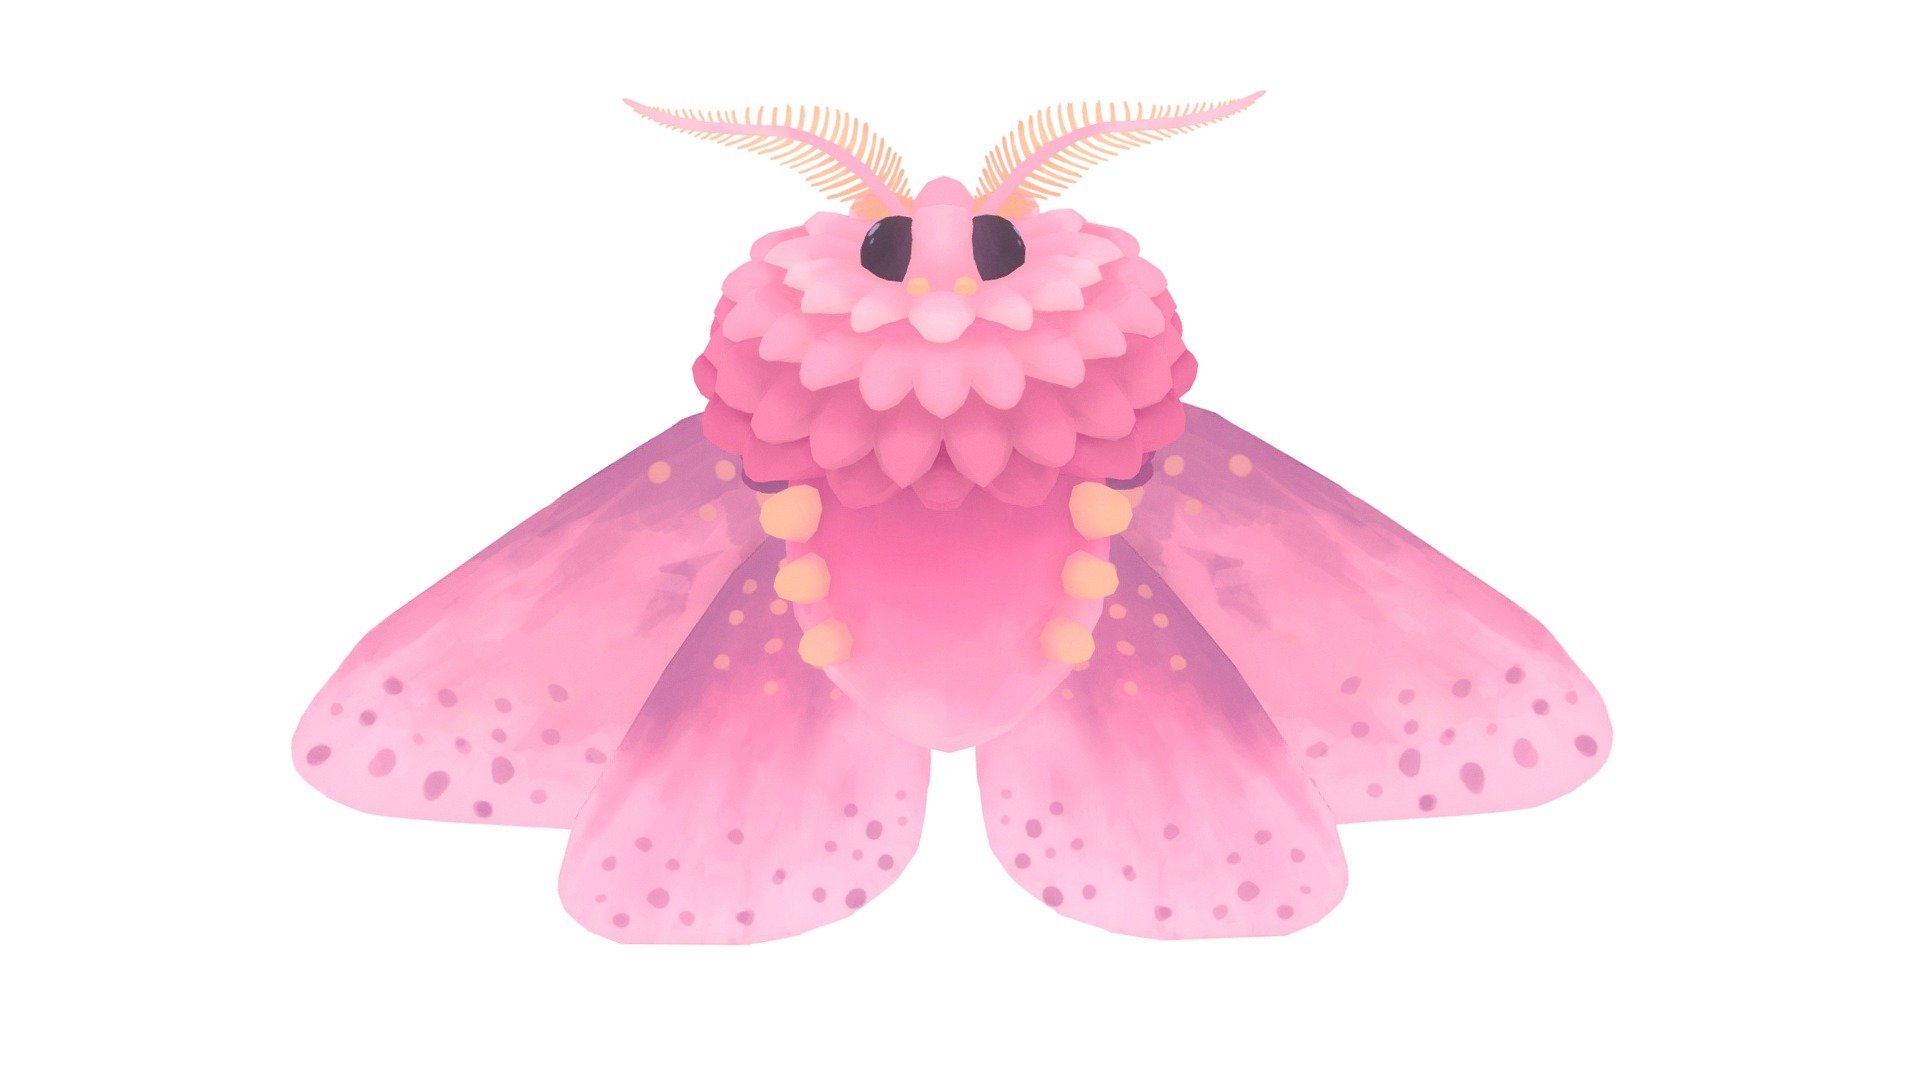 Rosy moth model by peachyroyalty [761dbf8]